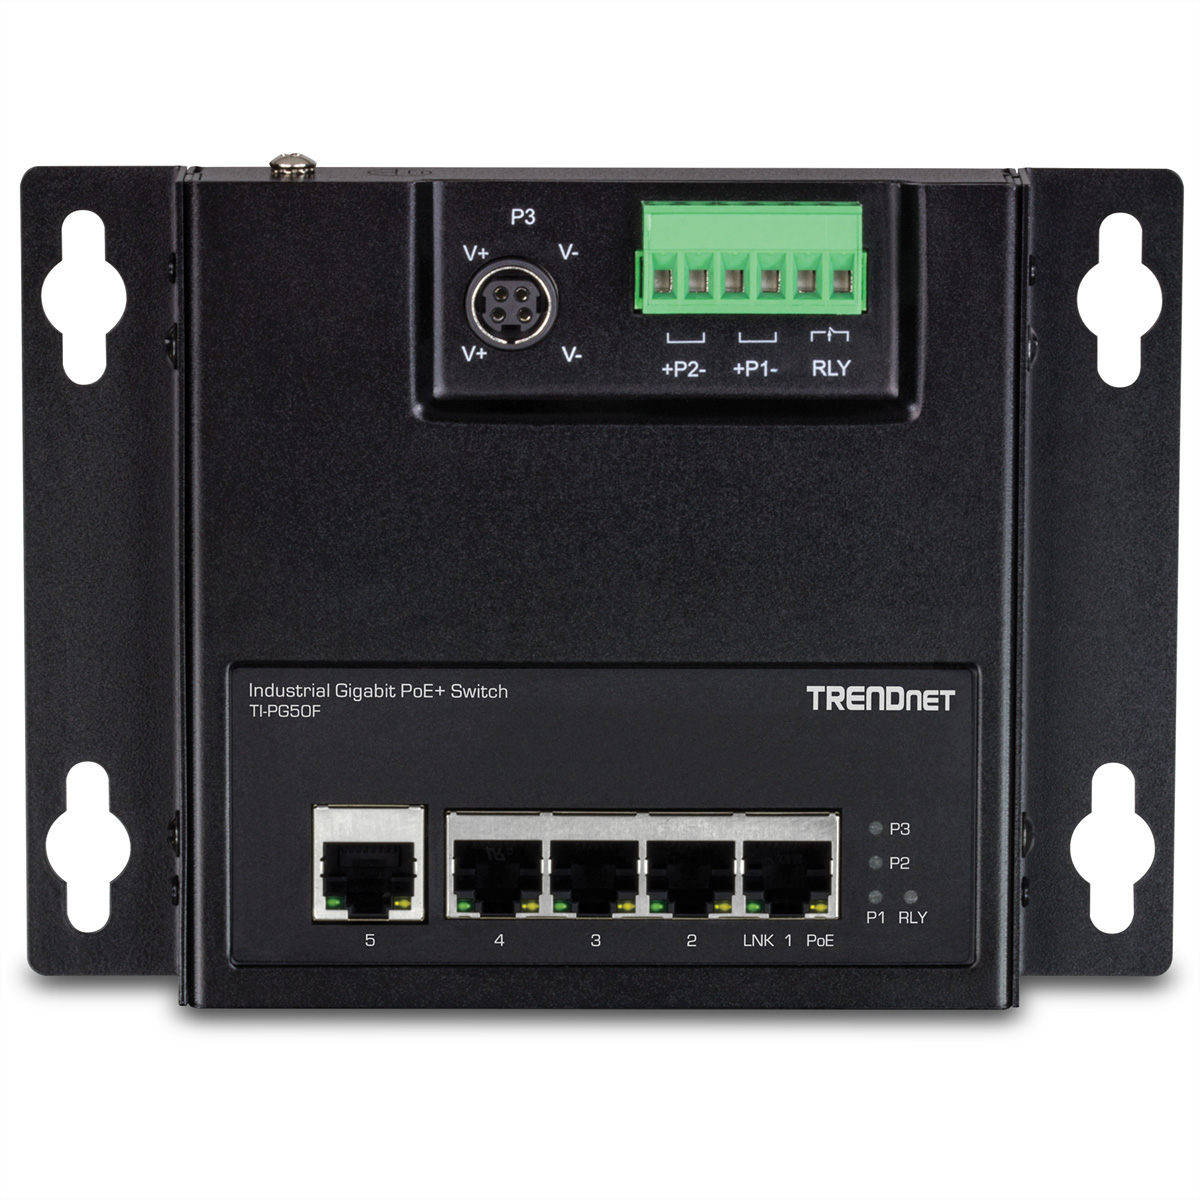 TRENDNET TI-PG50F 5-Port Industrial Access Front Switch PoE Gigabit PoE+ Gigabit Switch